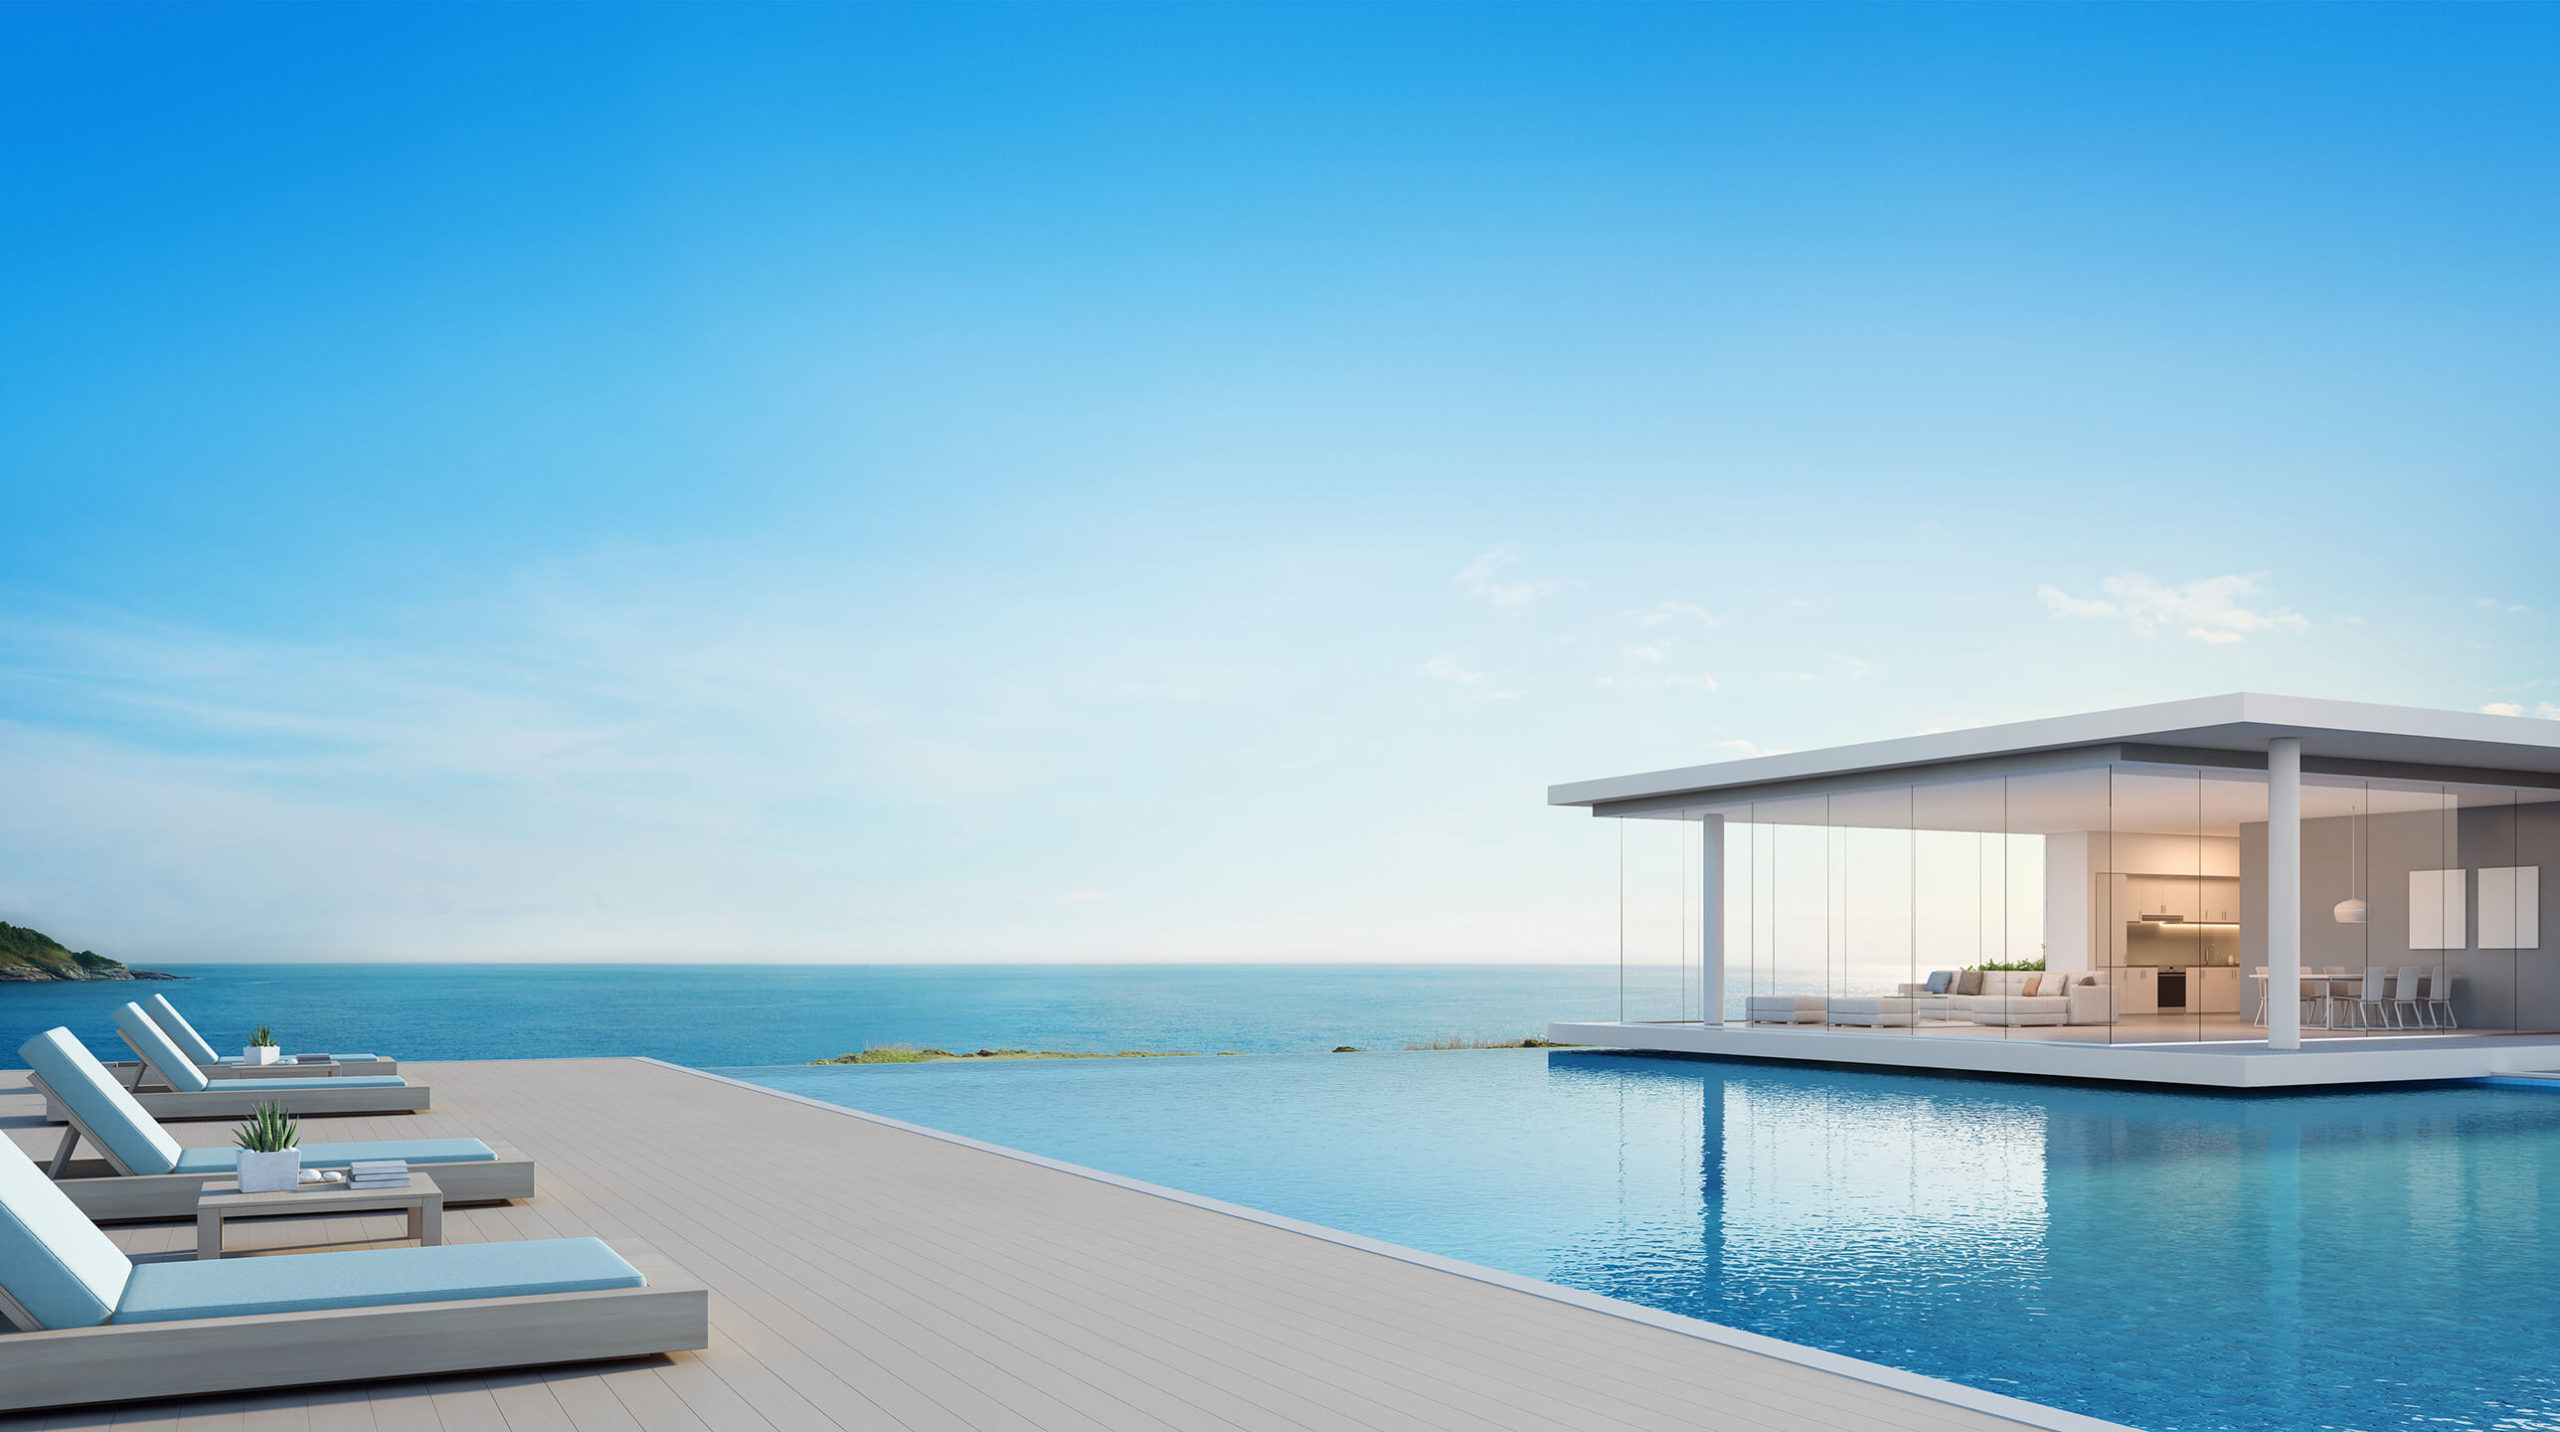 Coastal Capital Header image. Luxury modern home with infinity pool, overlooking the ocean.